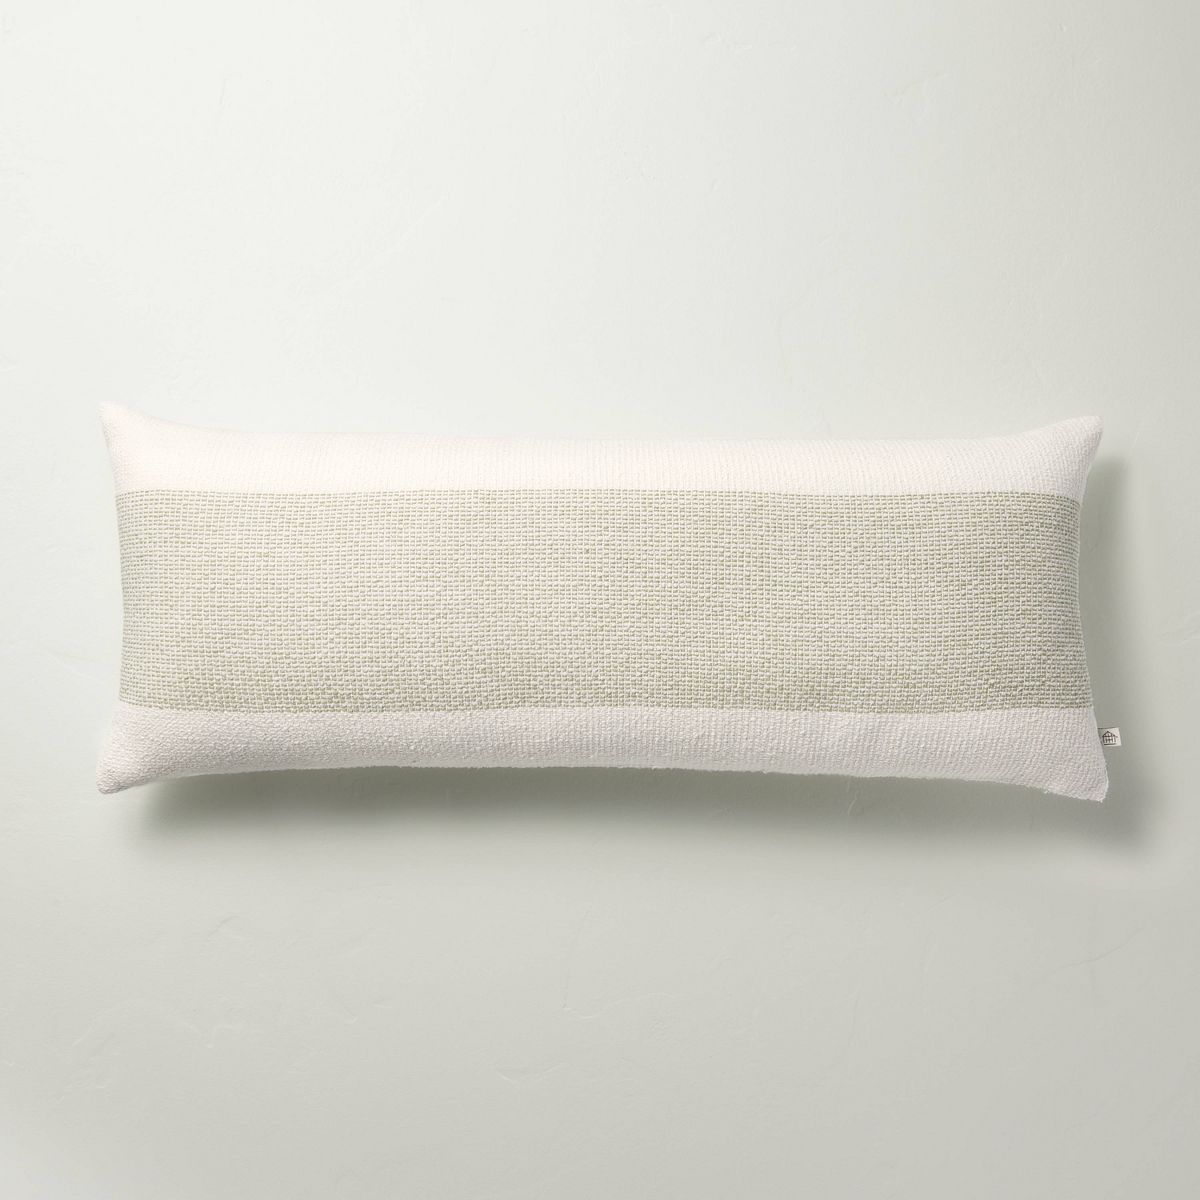 12"x30" Center Color Block Lumbar Throw Pillow Cream/Sage Green - Hearth & Hand™ with Magnolia | Target